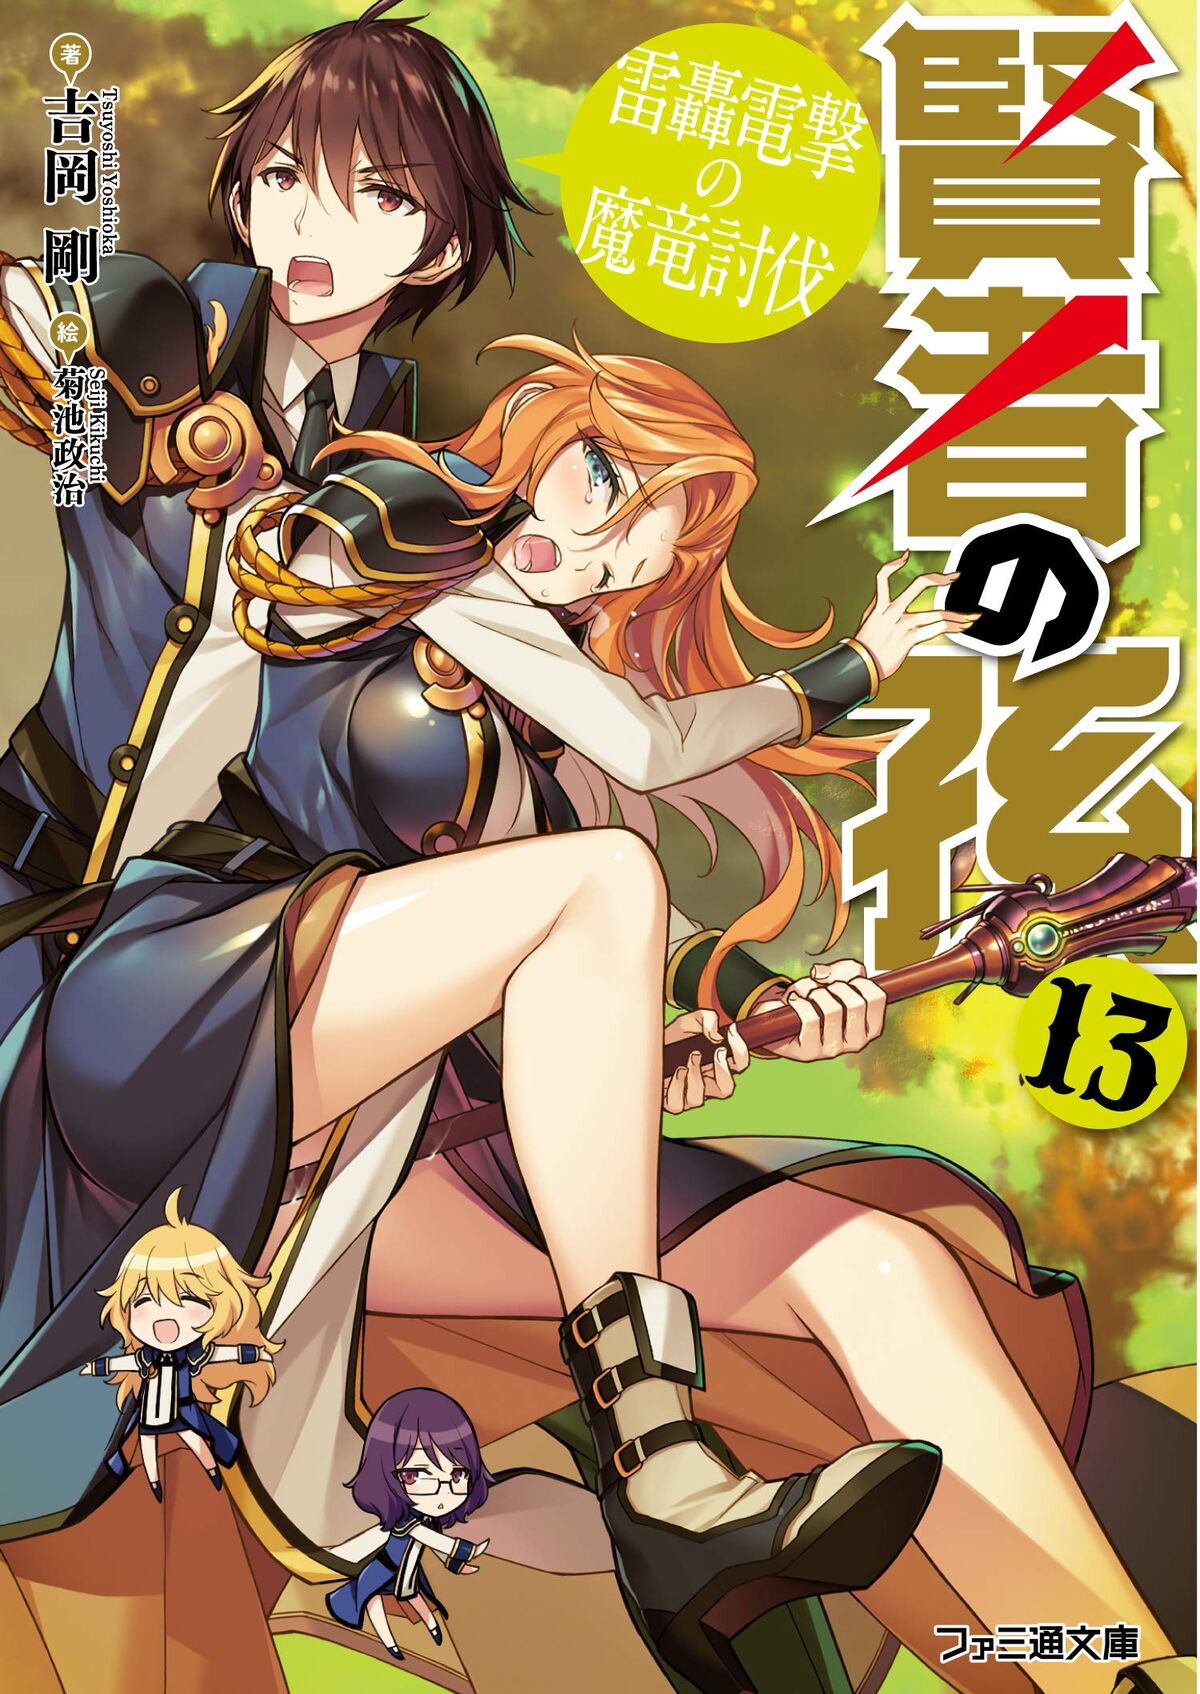 Kenja no Mago (light novel) - Anime News Network